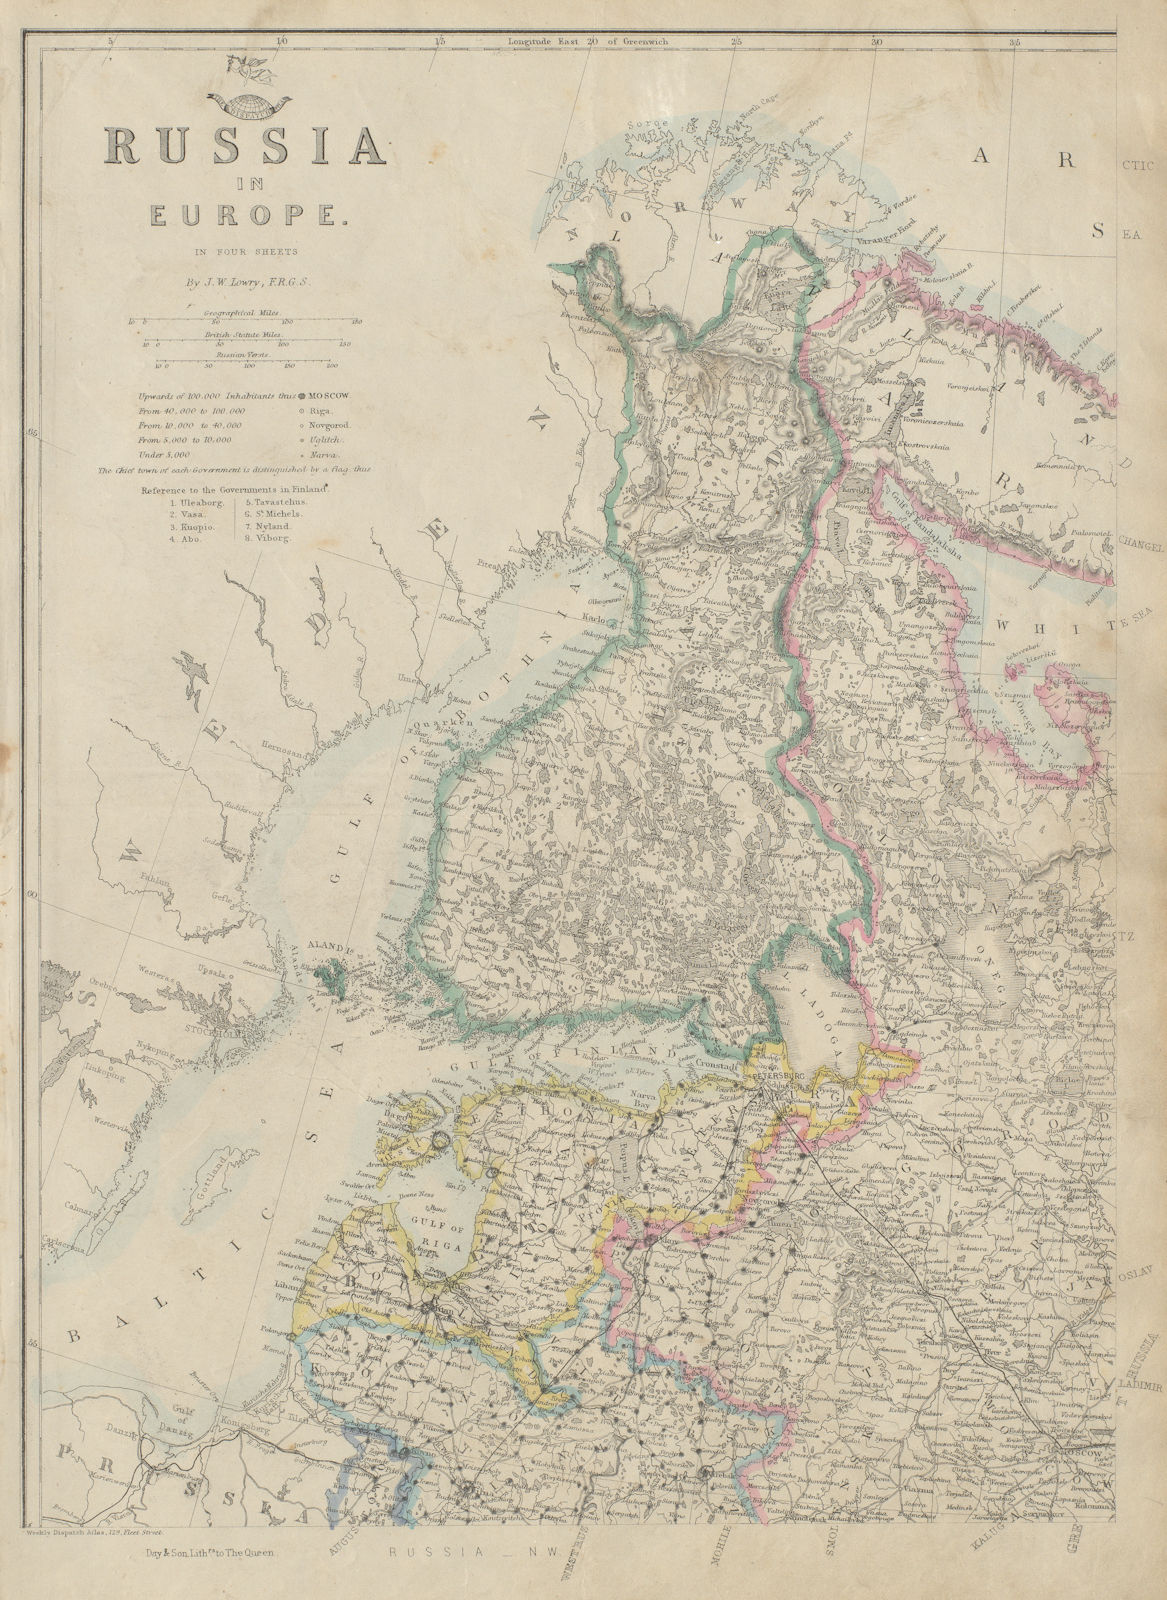 FINLAND/BALTICS. Esthonia Livonia Courland Latvia. St Petersburg.LOWRY 1862 map